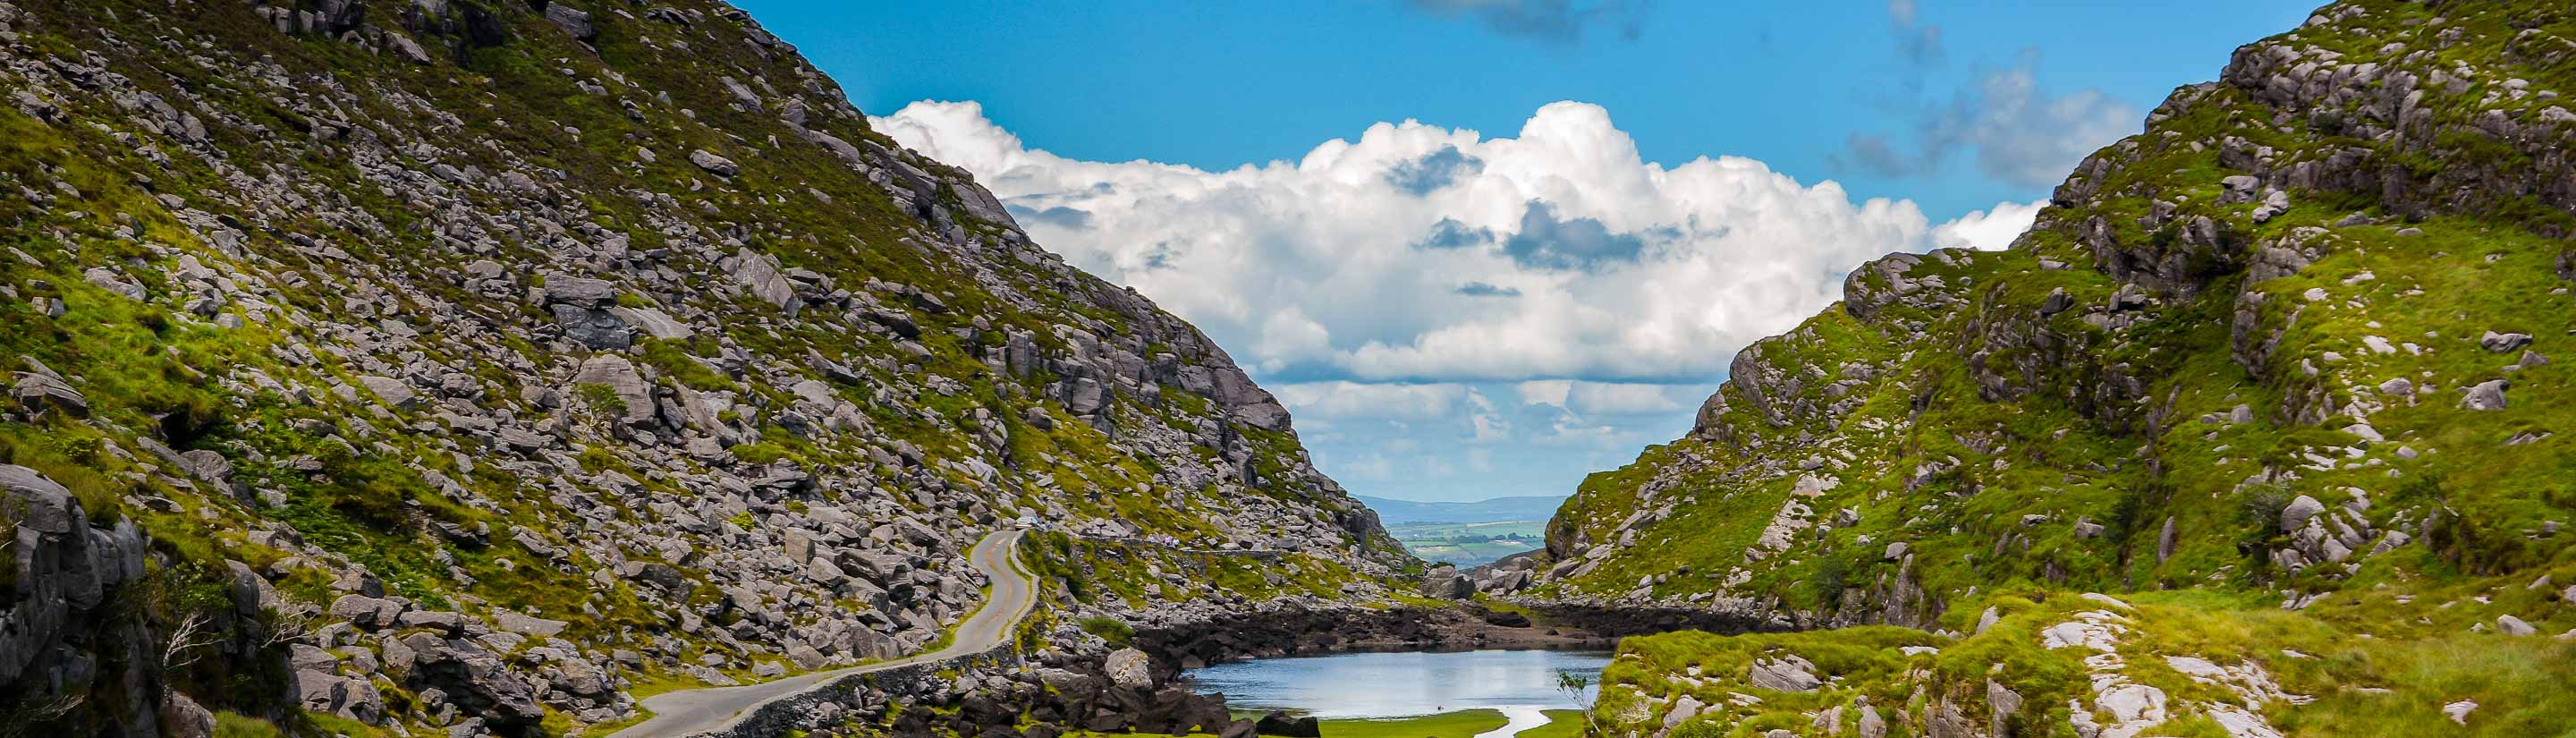 Rundreise Irland: Die grüne Insel im Atlantik